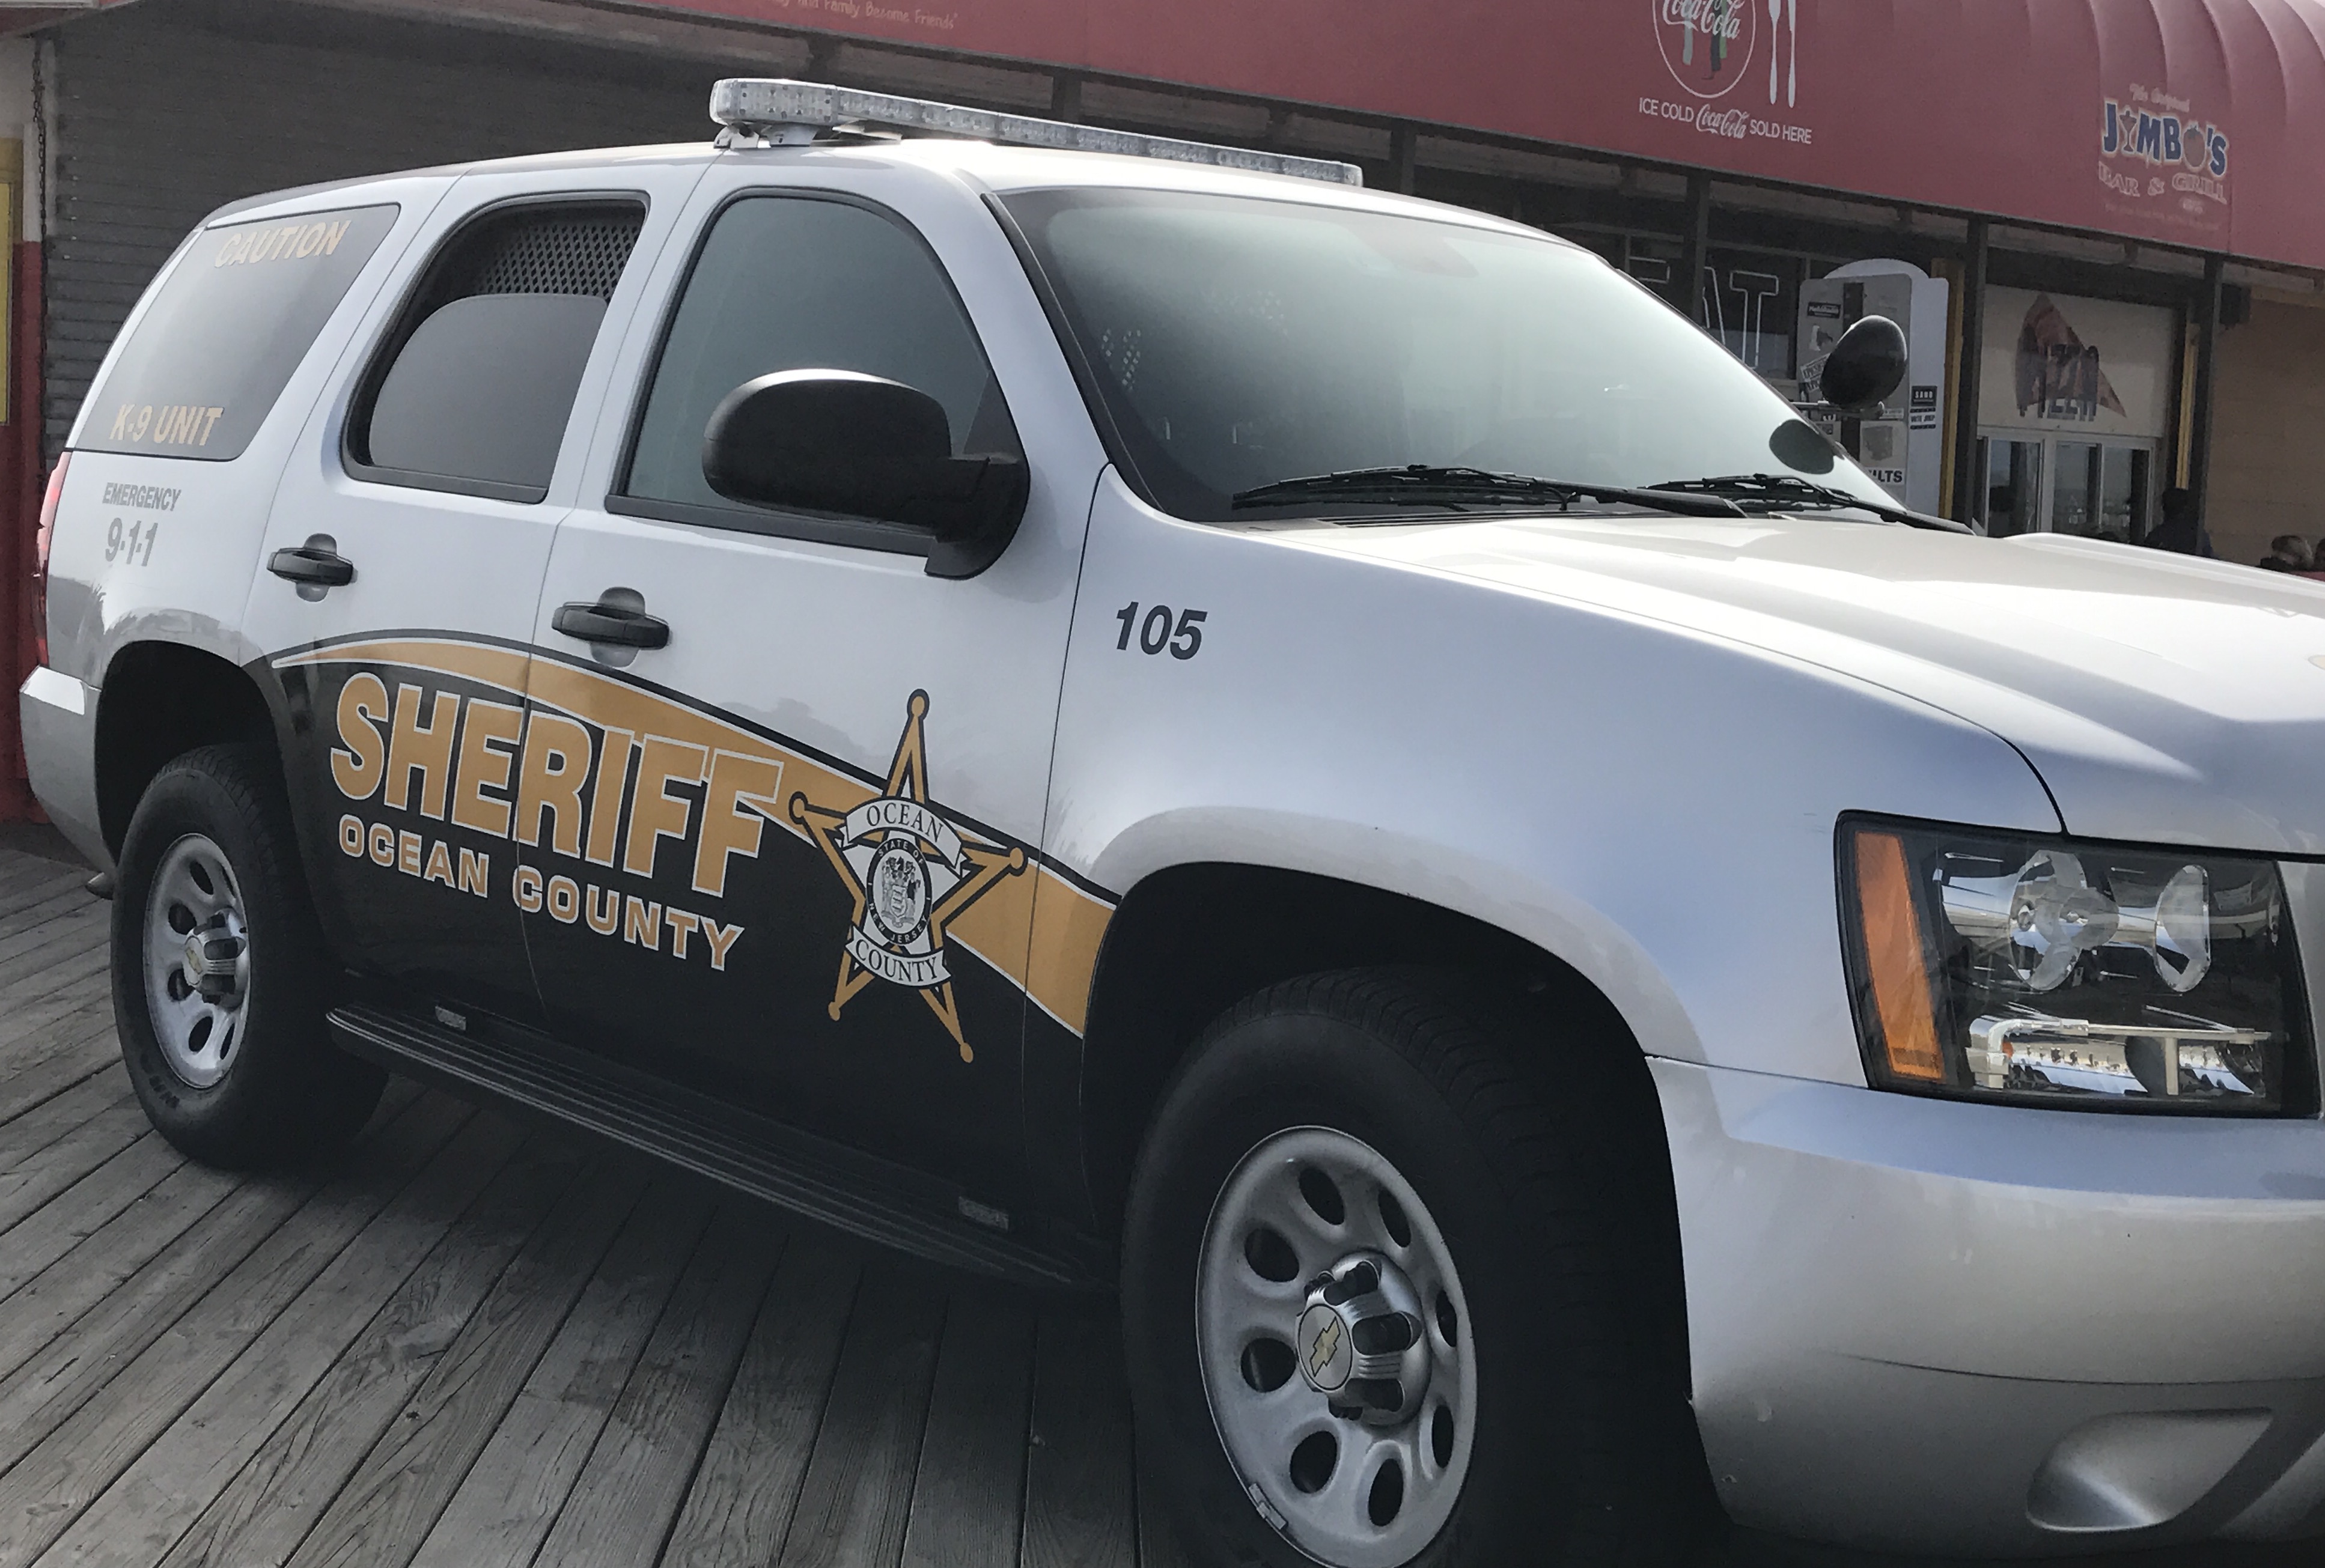 Ocean County Sheriff's Department vehicle. (Photo: Daniel Nee)